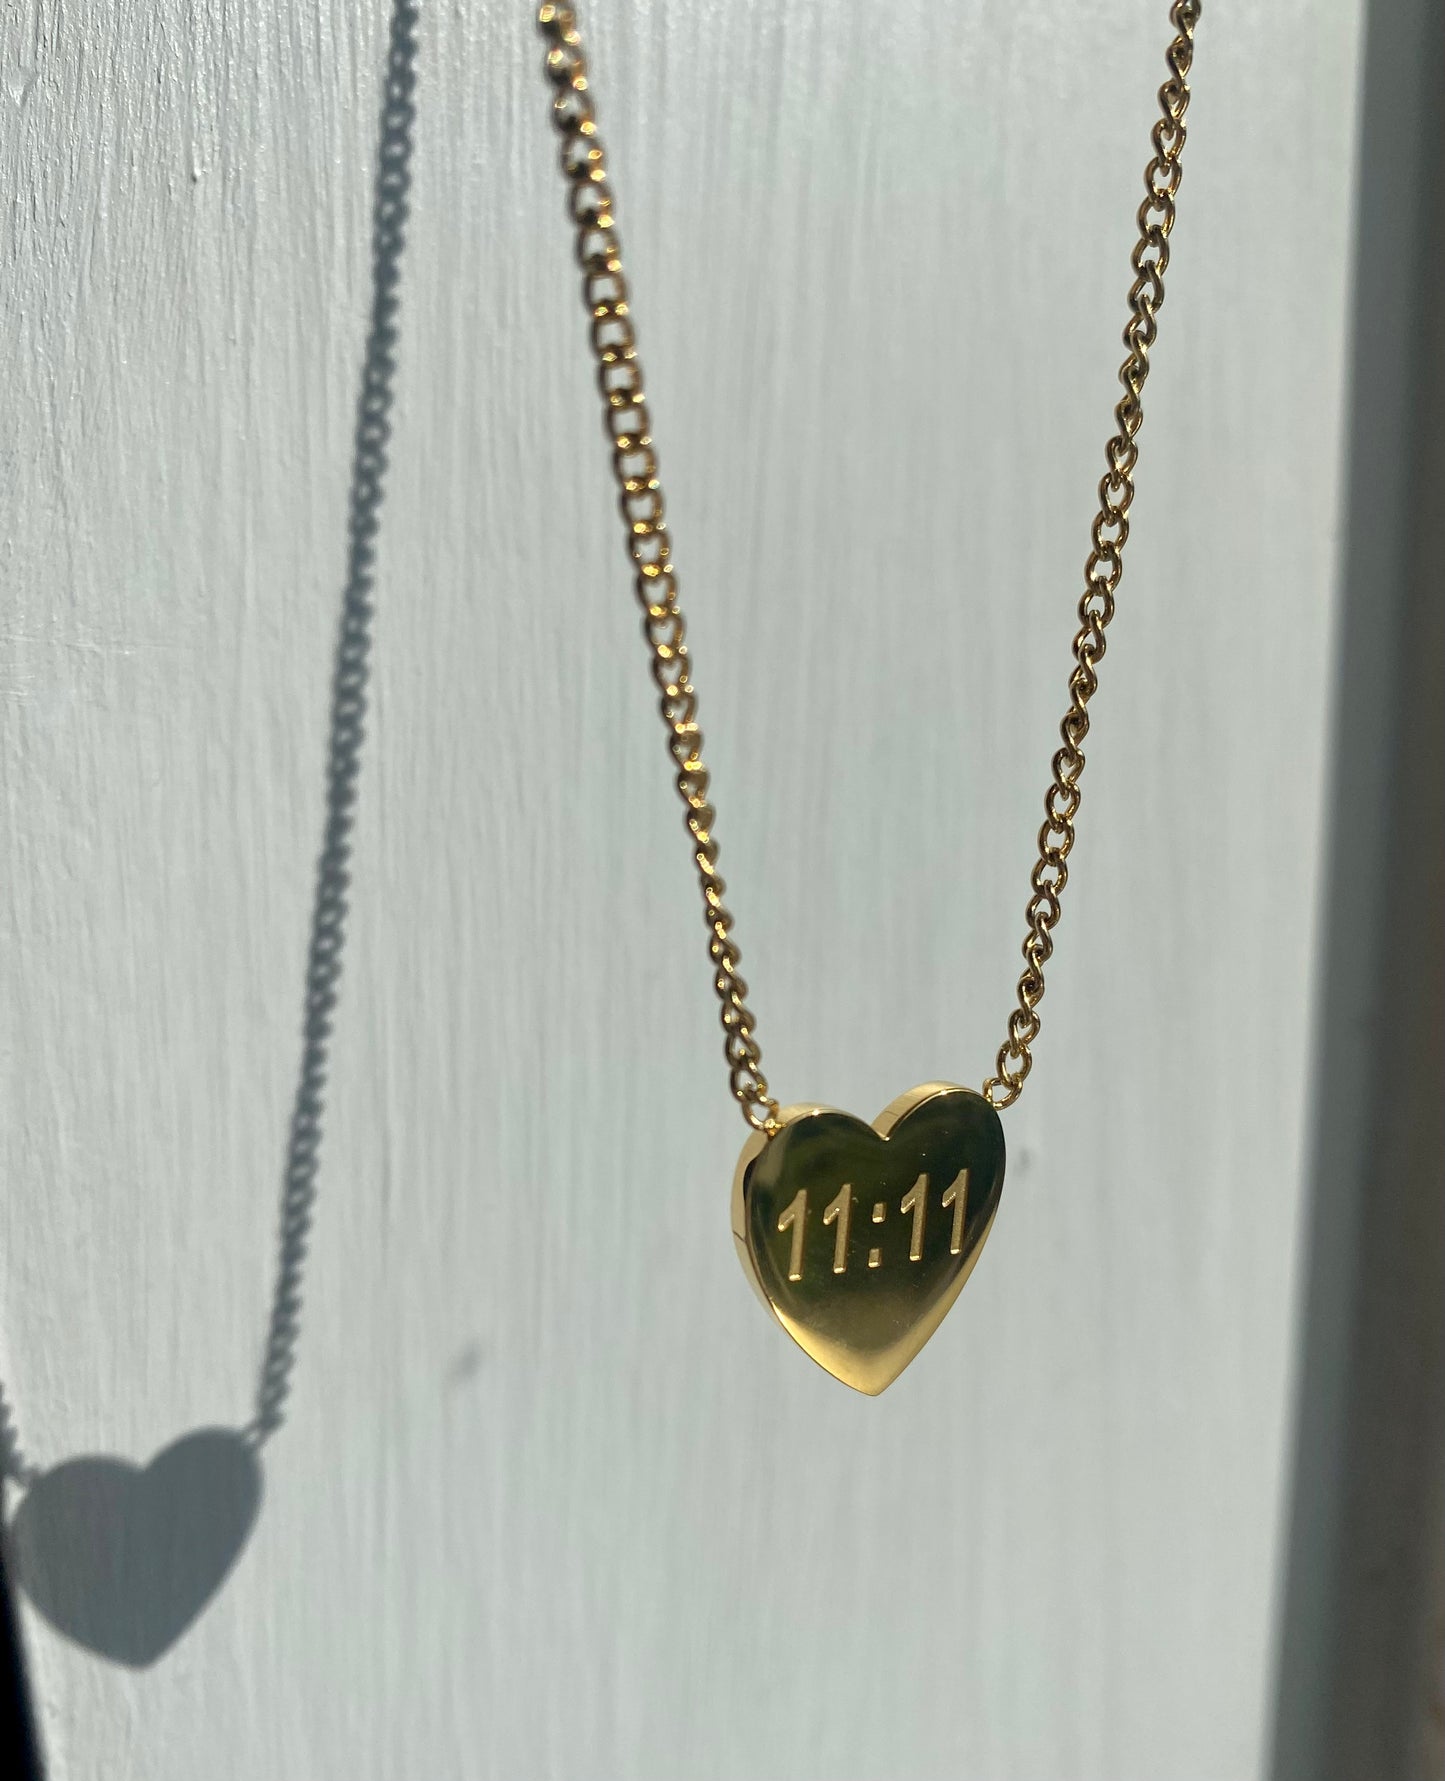 11:11 Gold Necklace 18k